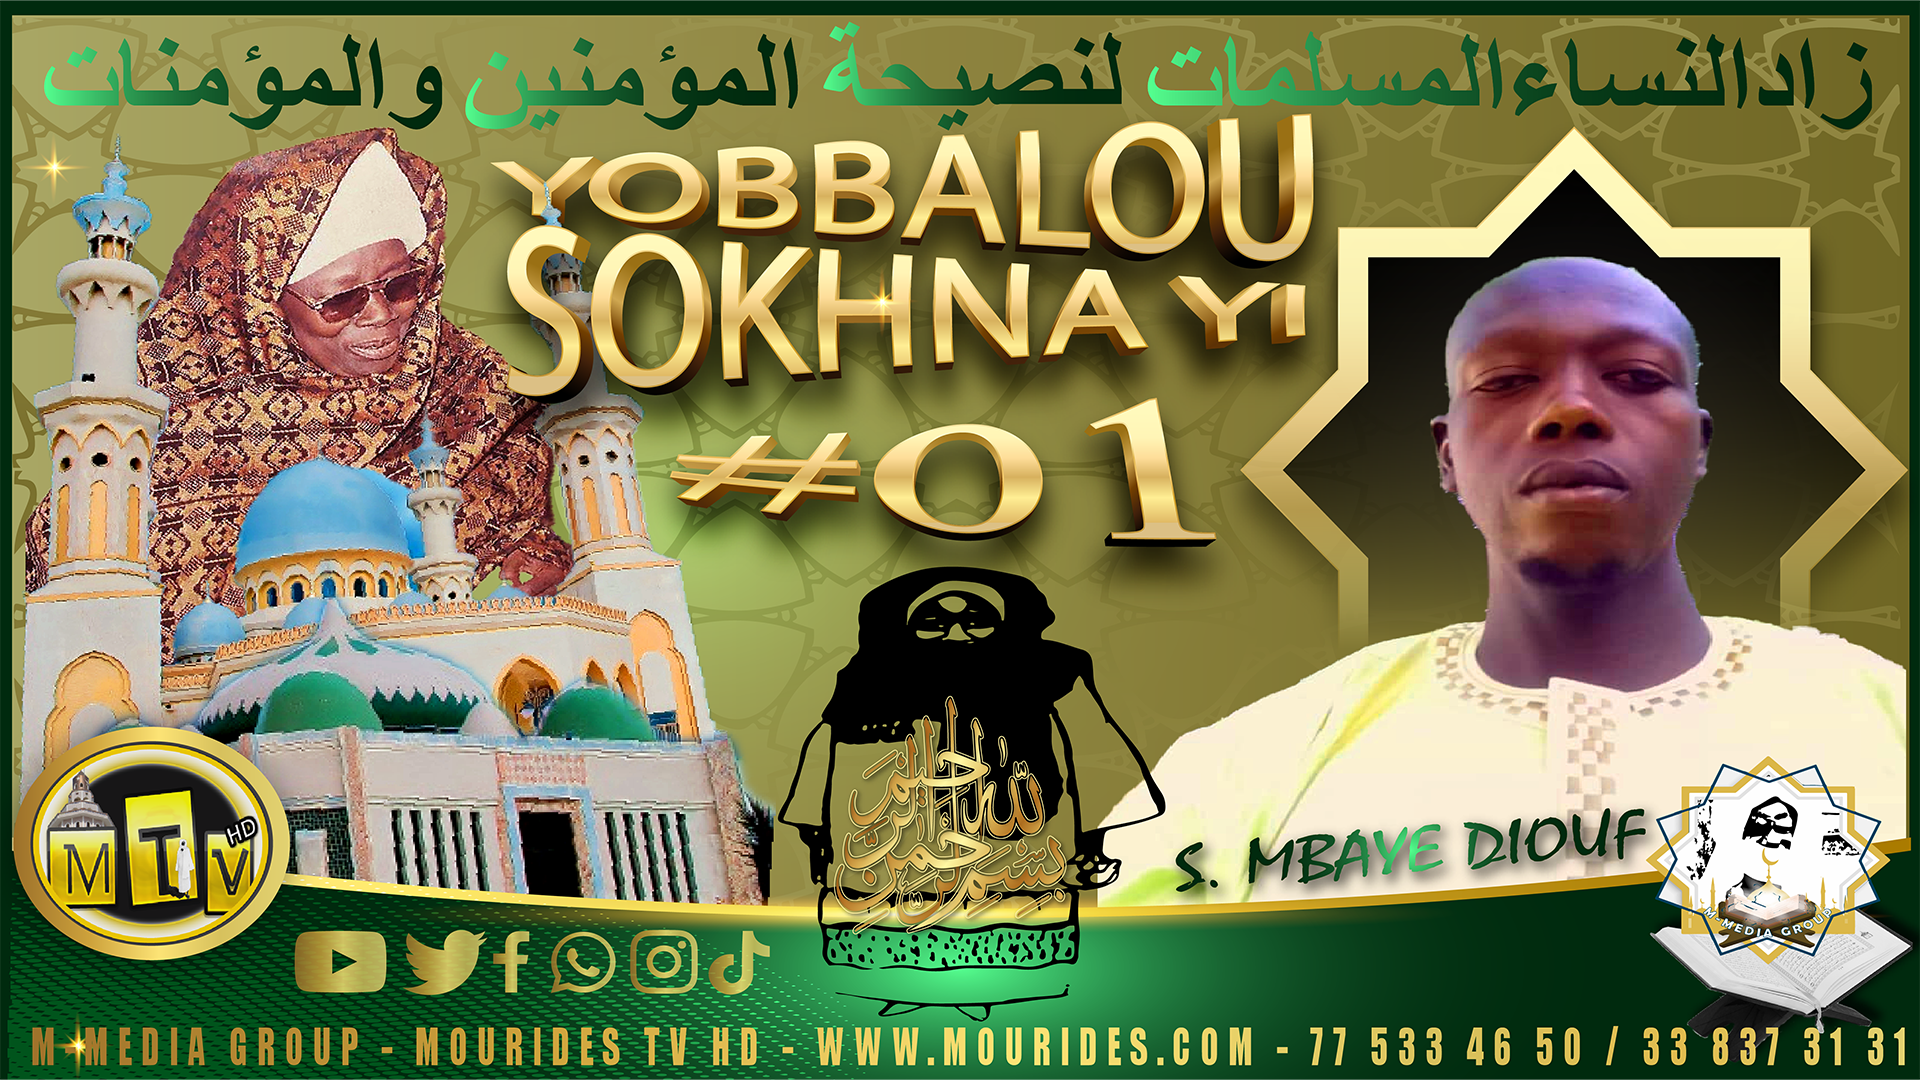 Yobbalou Sokhna yi #01 زادالنساء Référence de la femme vertueuse - Présentée par Serigne Mbaye Diouf